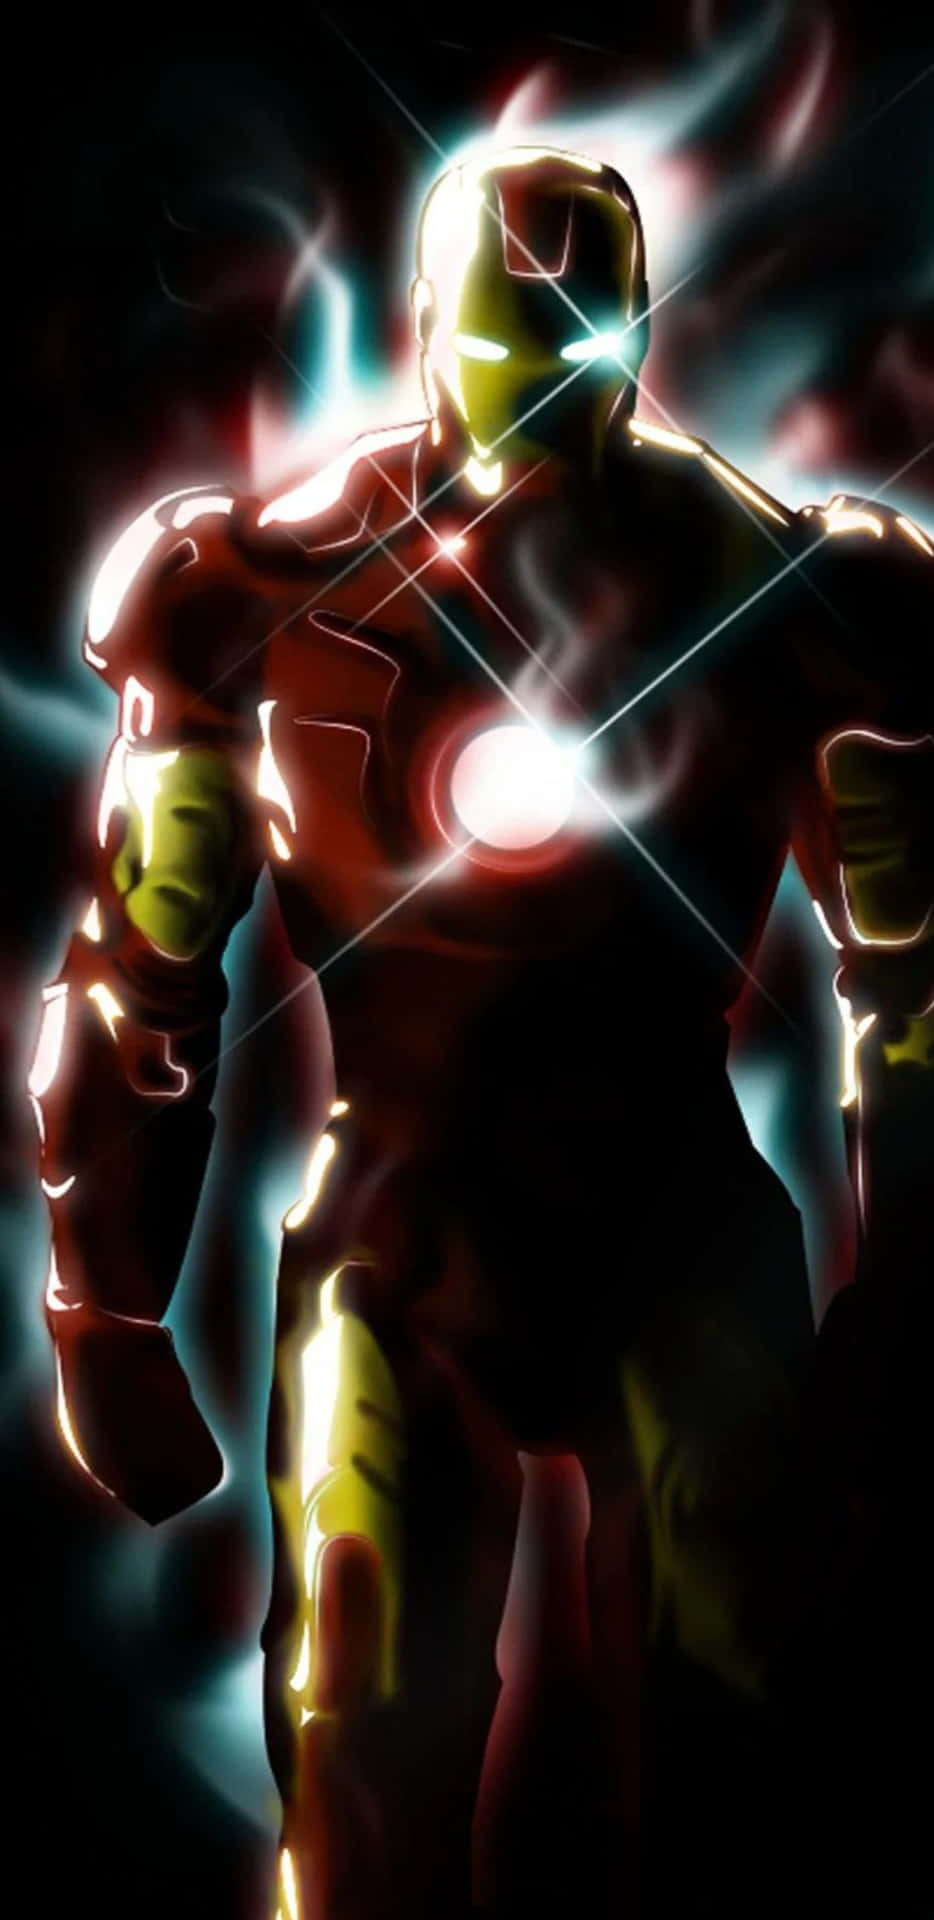 Pixel3xl Iron Man Flame Bakgrund